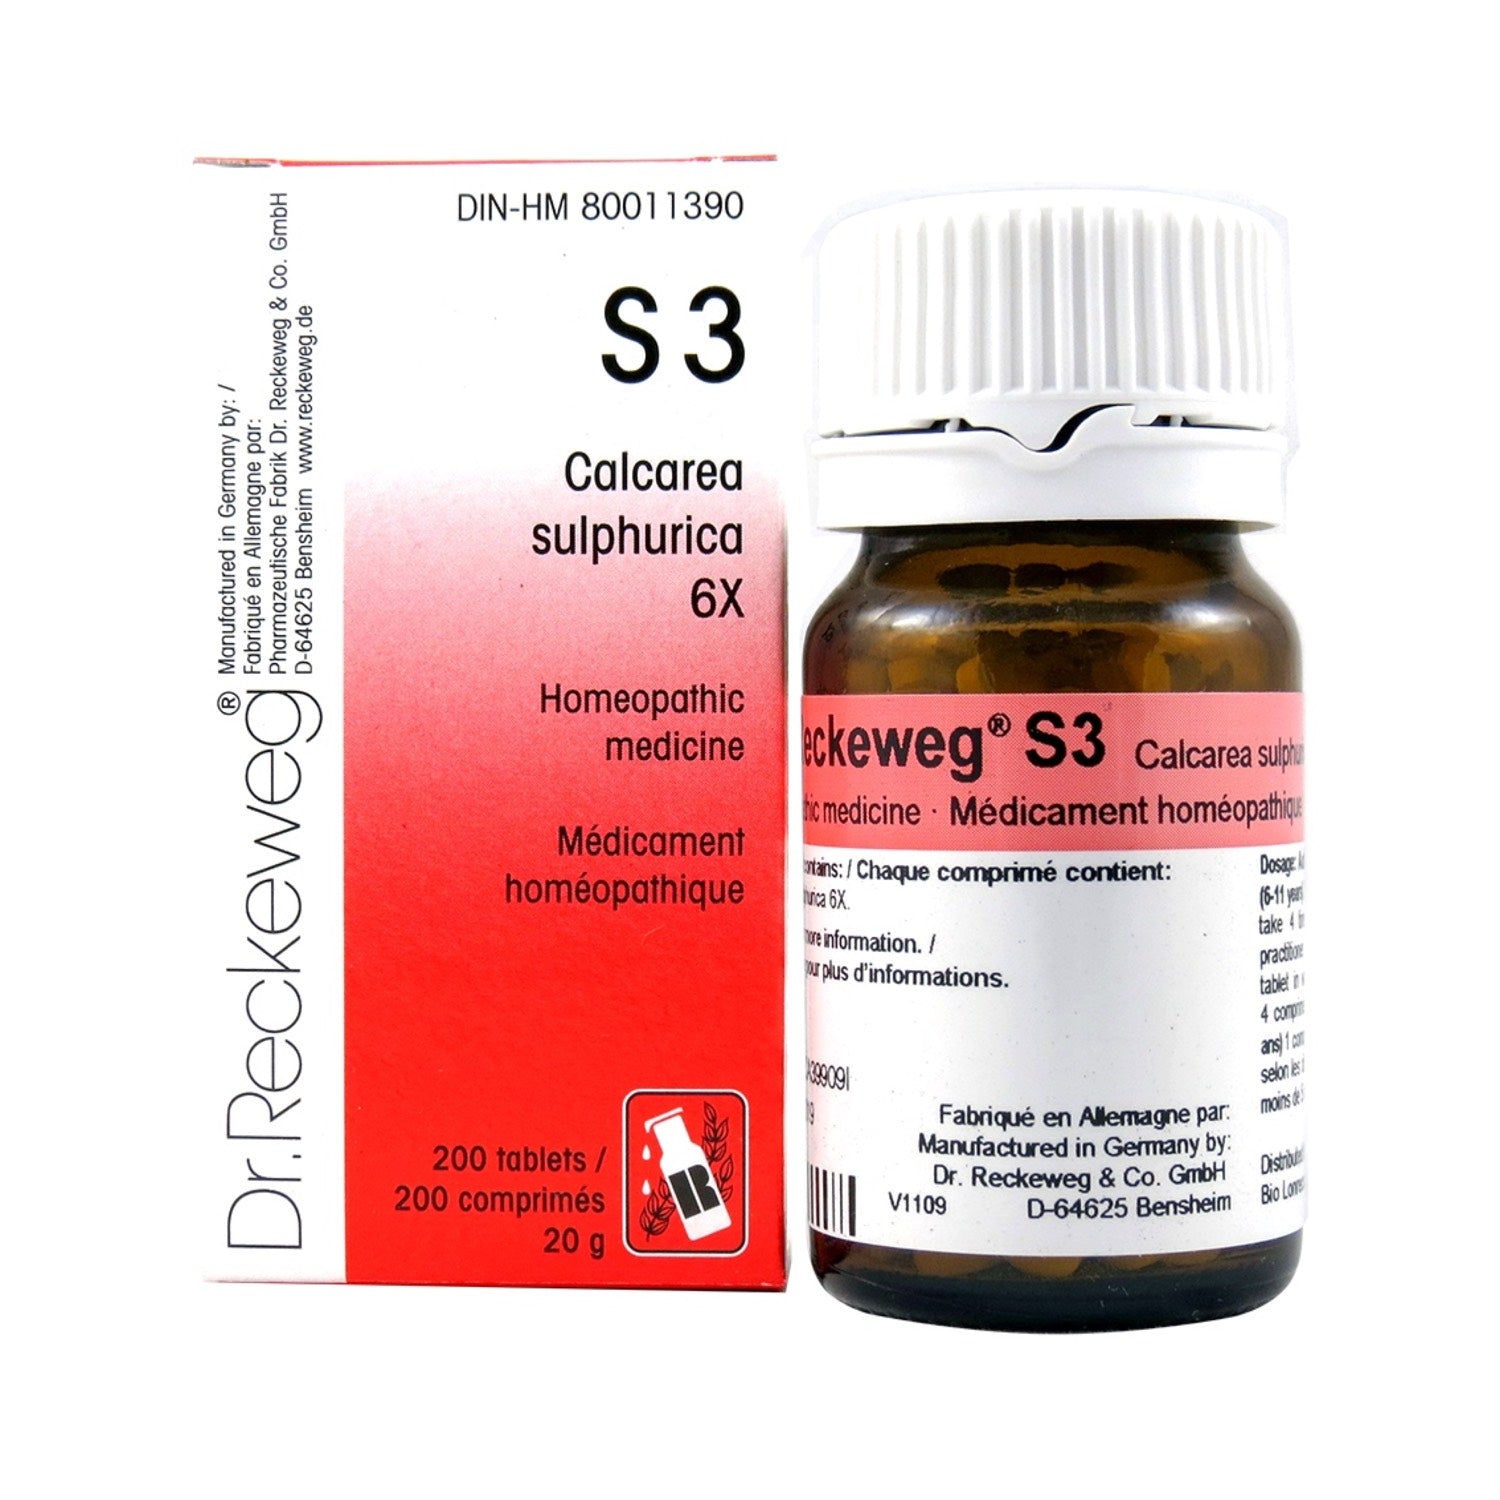 S3 Calcarea sulphurica Homeopathic medicine Schuessler salt  6X 200 tablets (20 g)